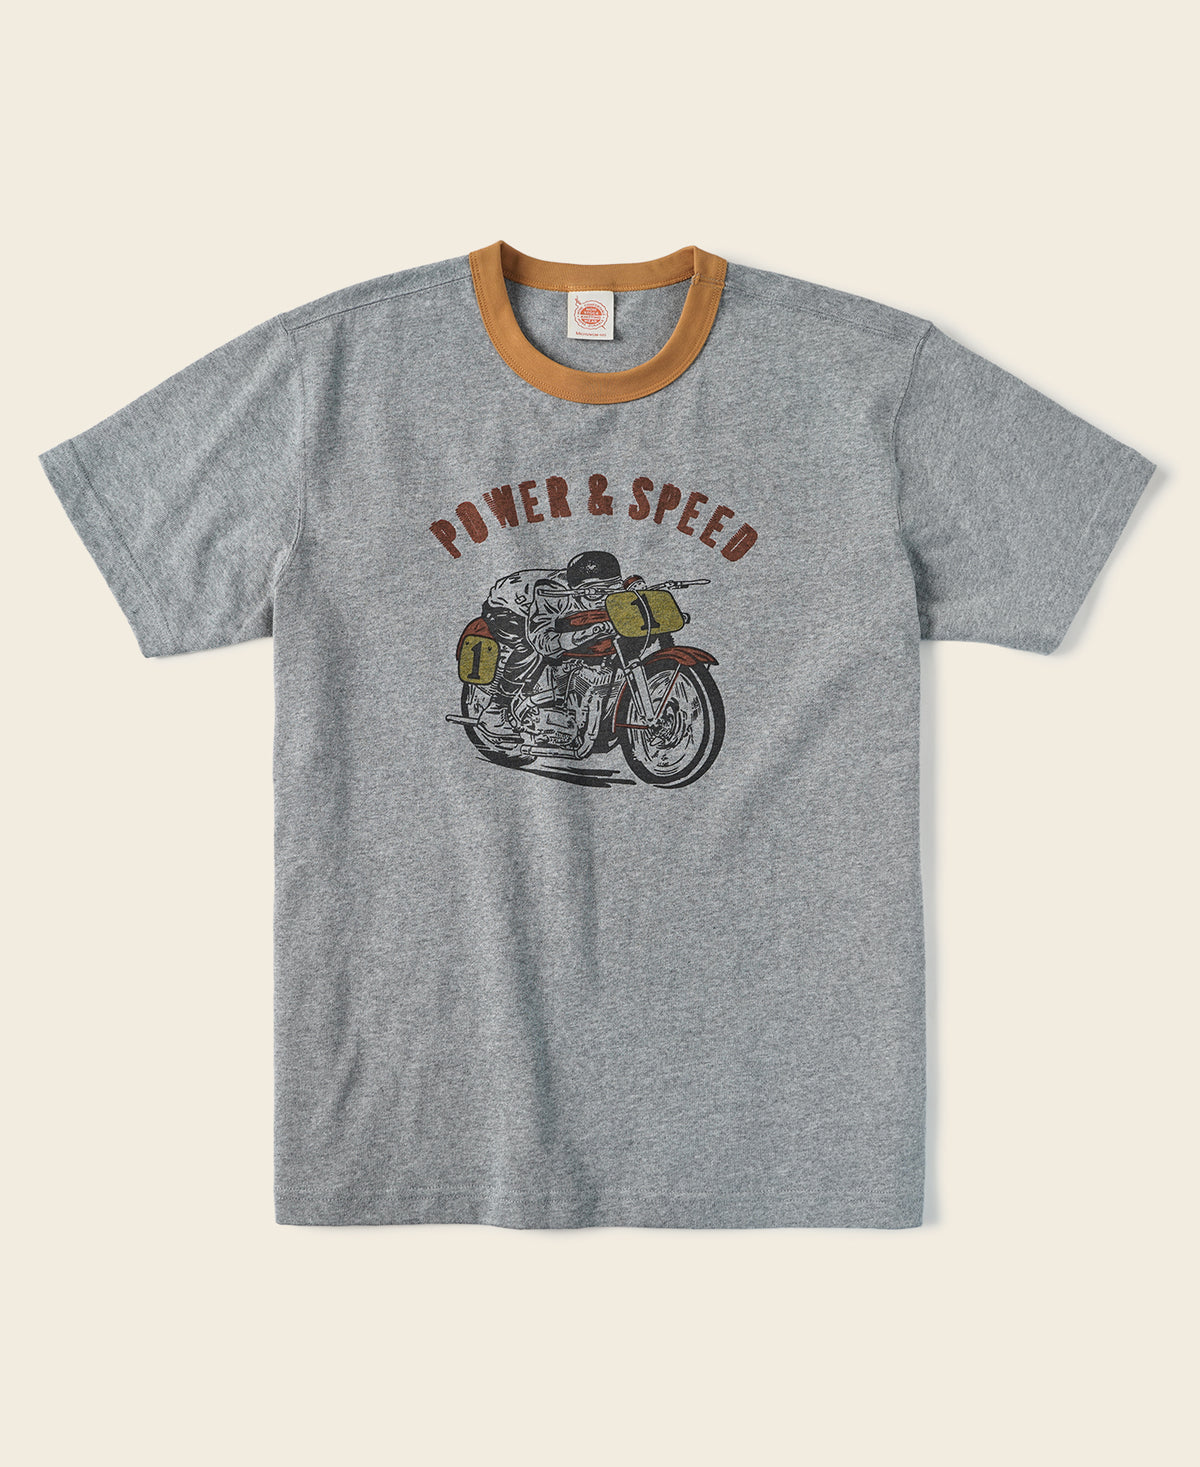 Retro Motorcycle Graphic T-Shirt - Gray